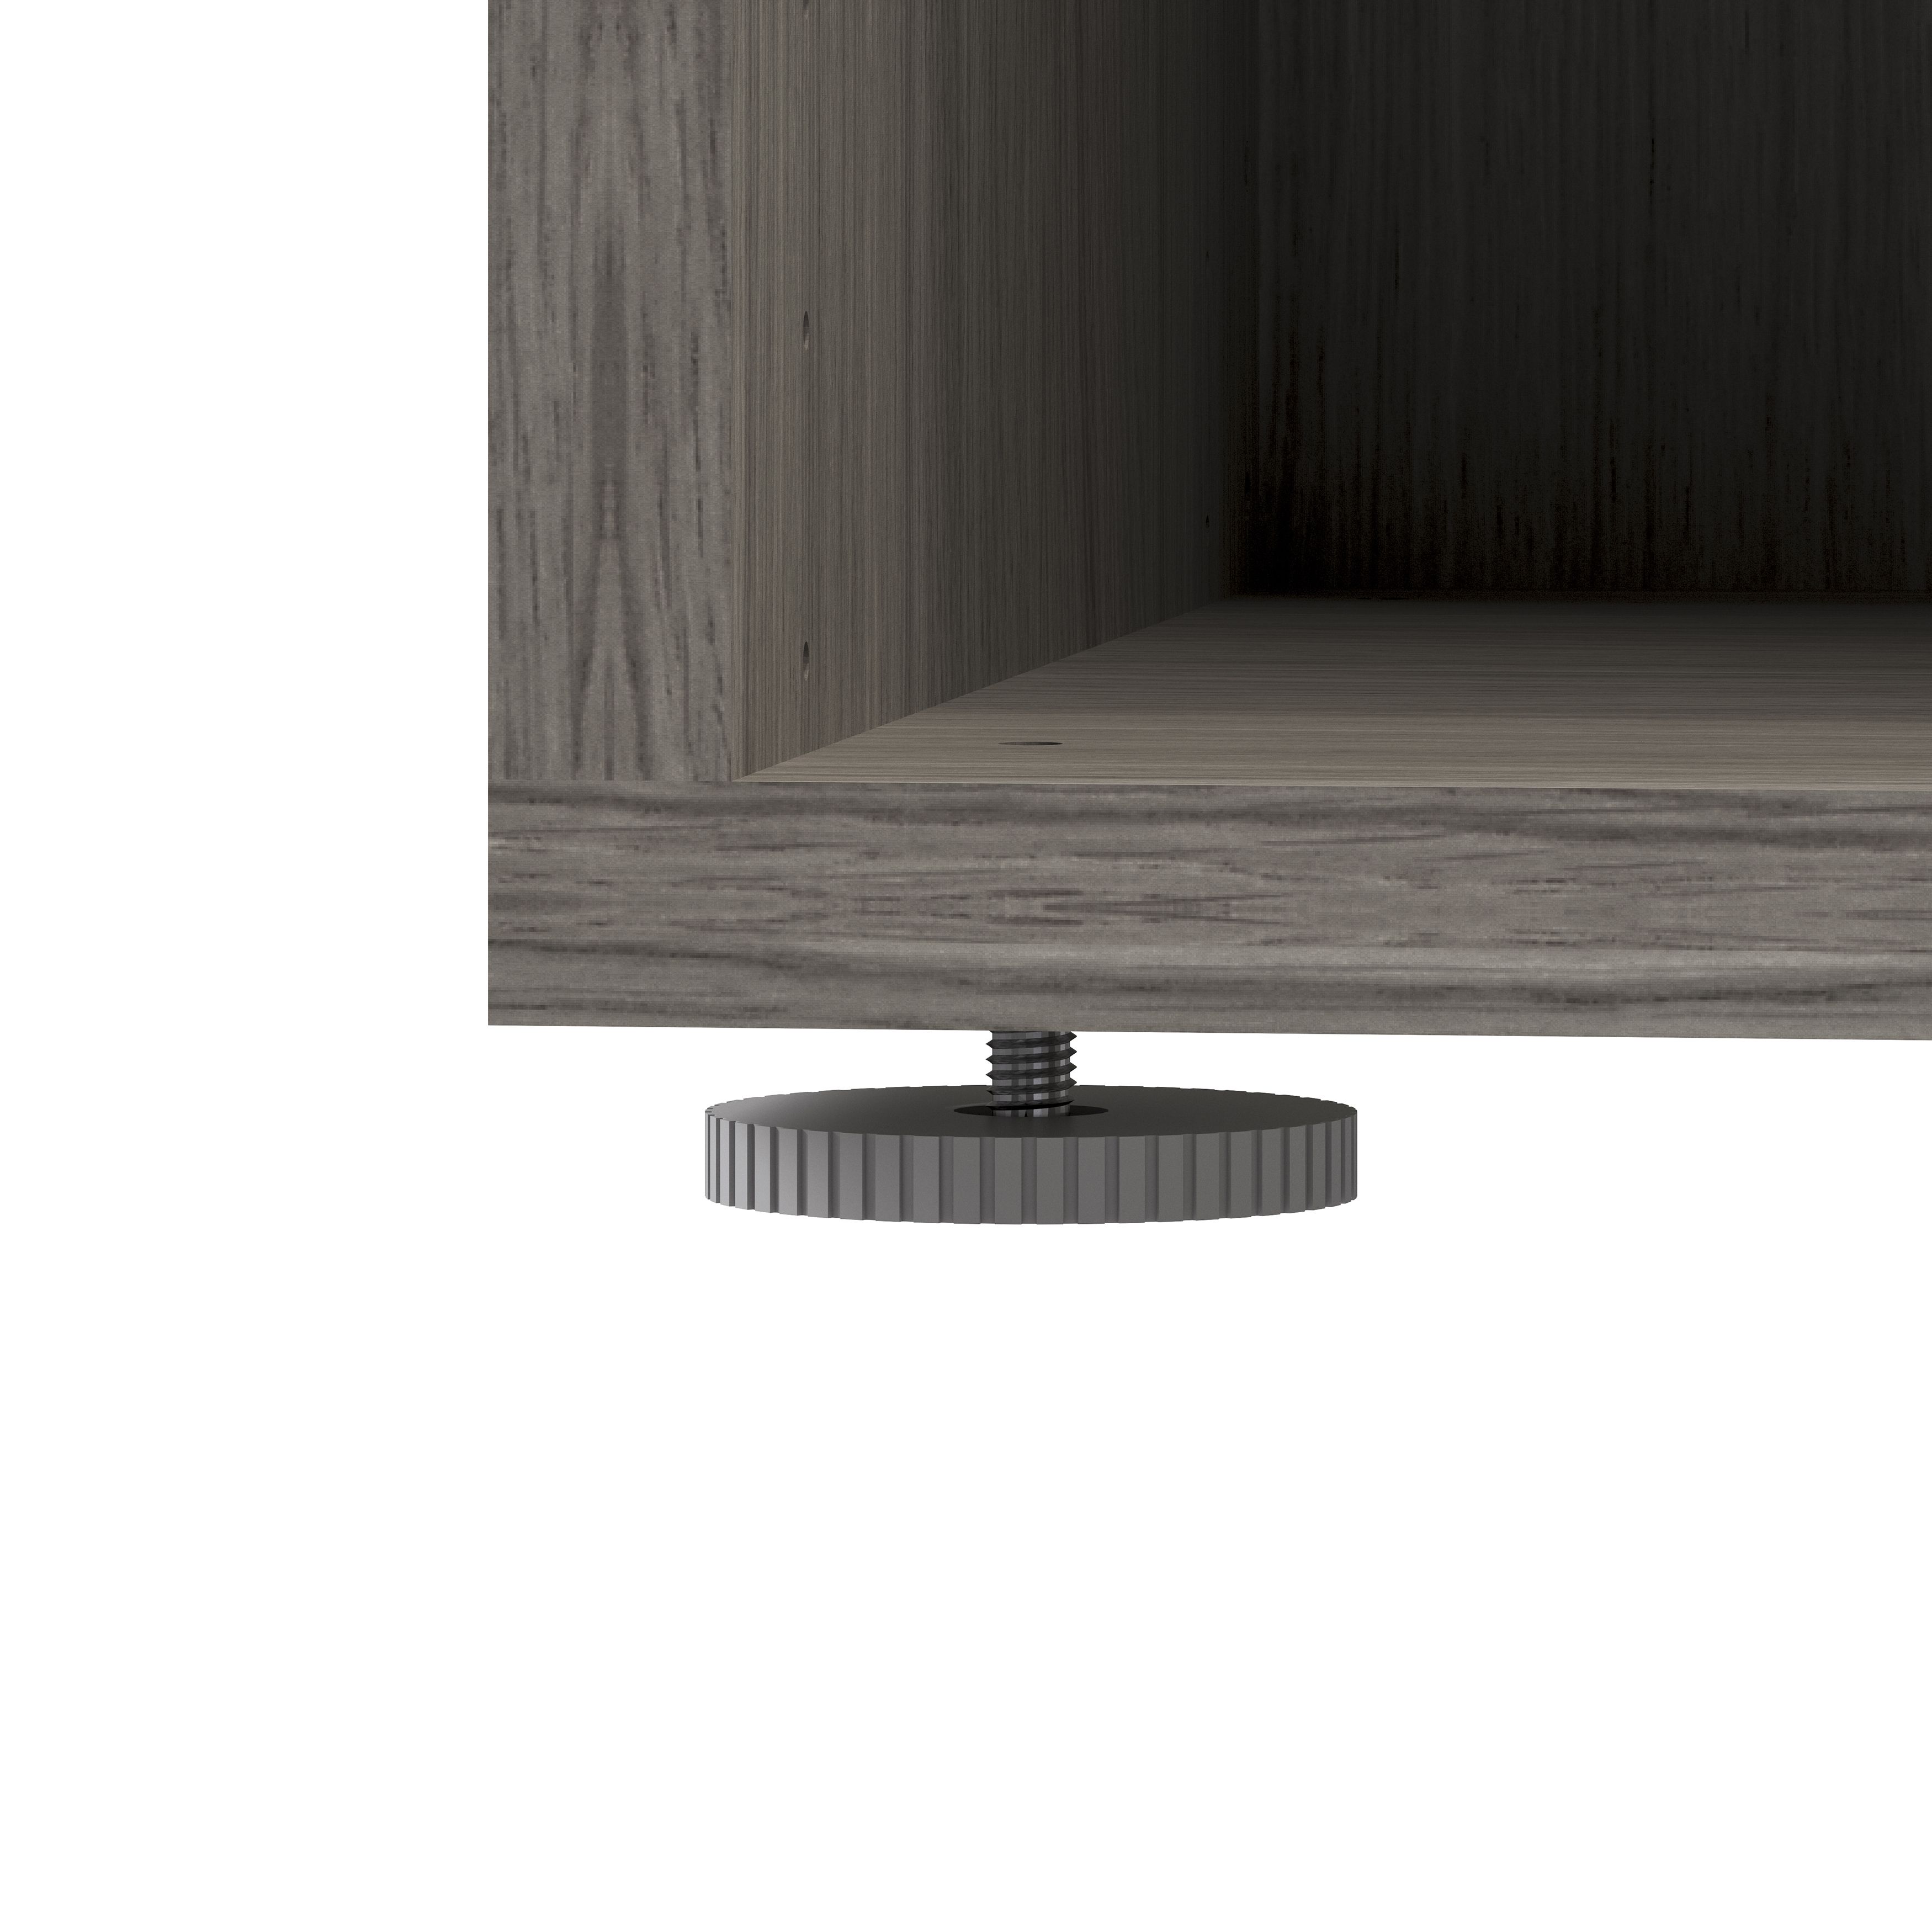 GoodHome Atomia Matt Grey oak effect Modular furniture cabinet, (H)1875mm (W)750mm (D)350mm